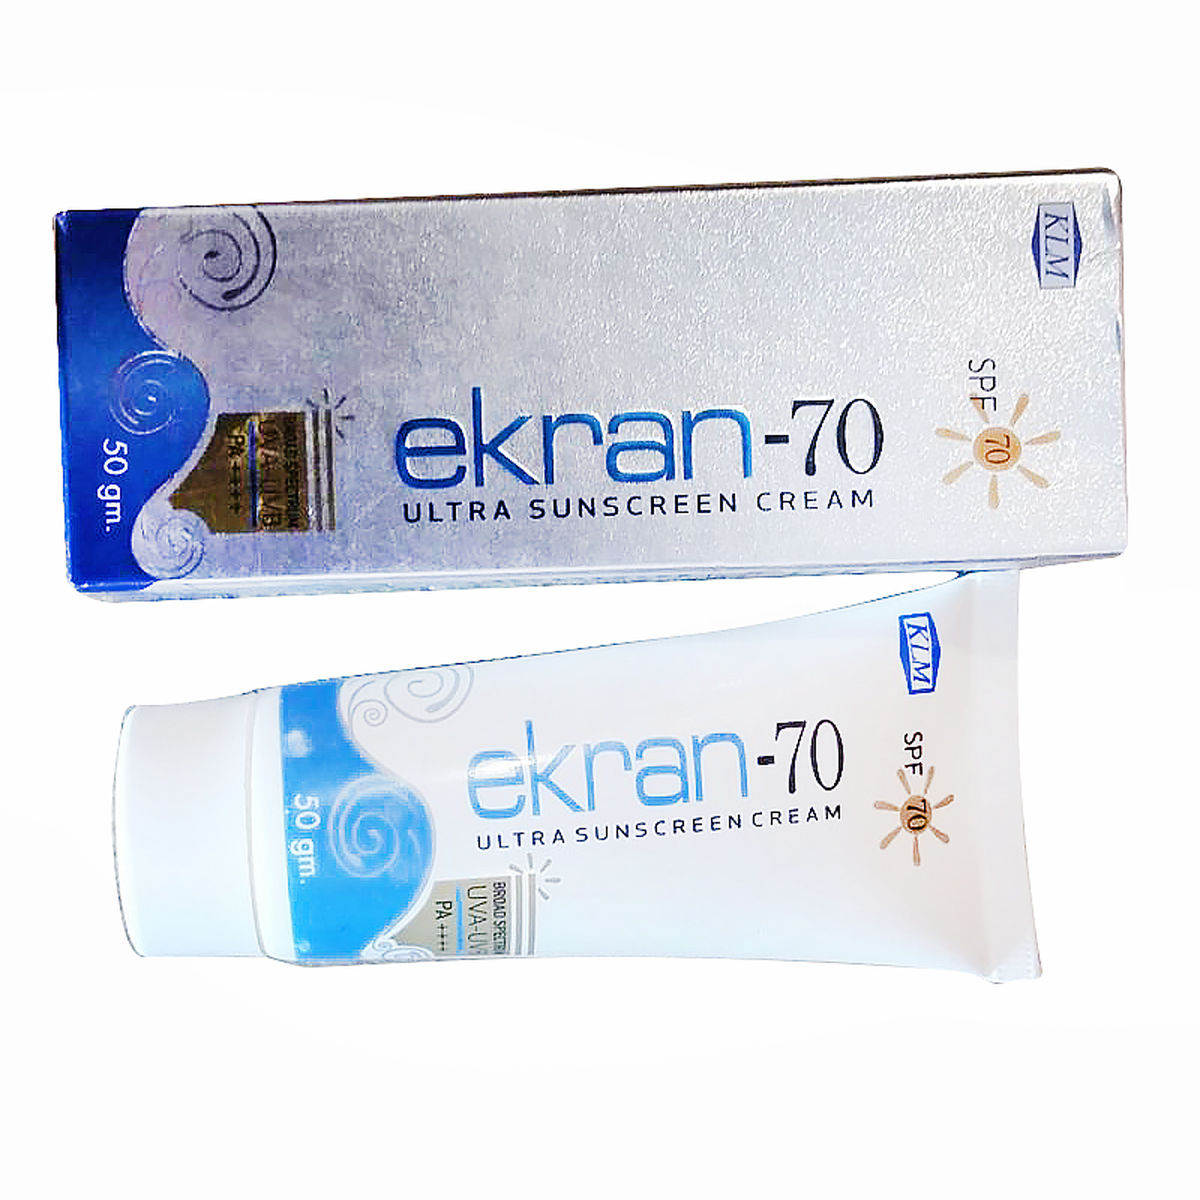 Ekran-70 Ultra Sunscreen Cream, 50 gm, Pack of 1 